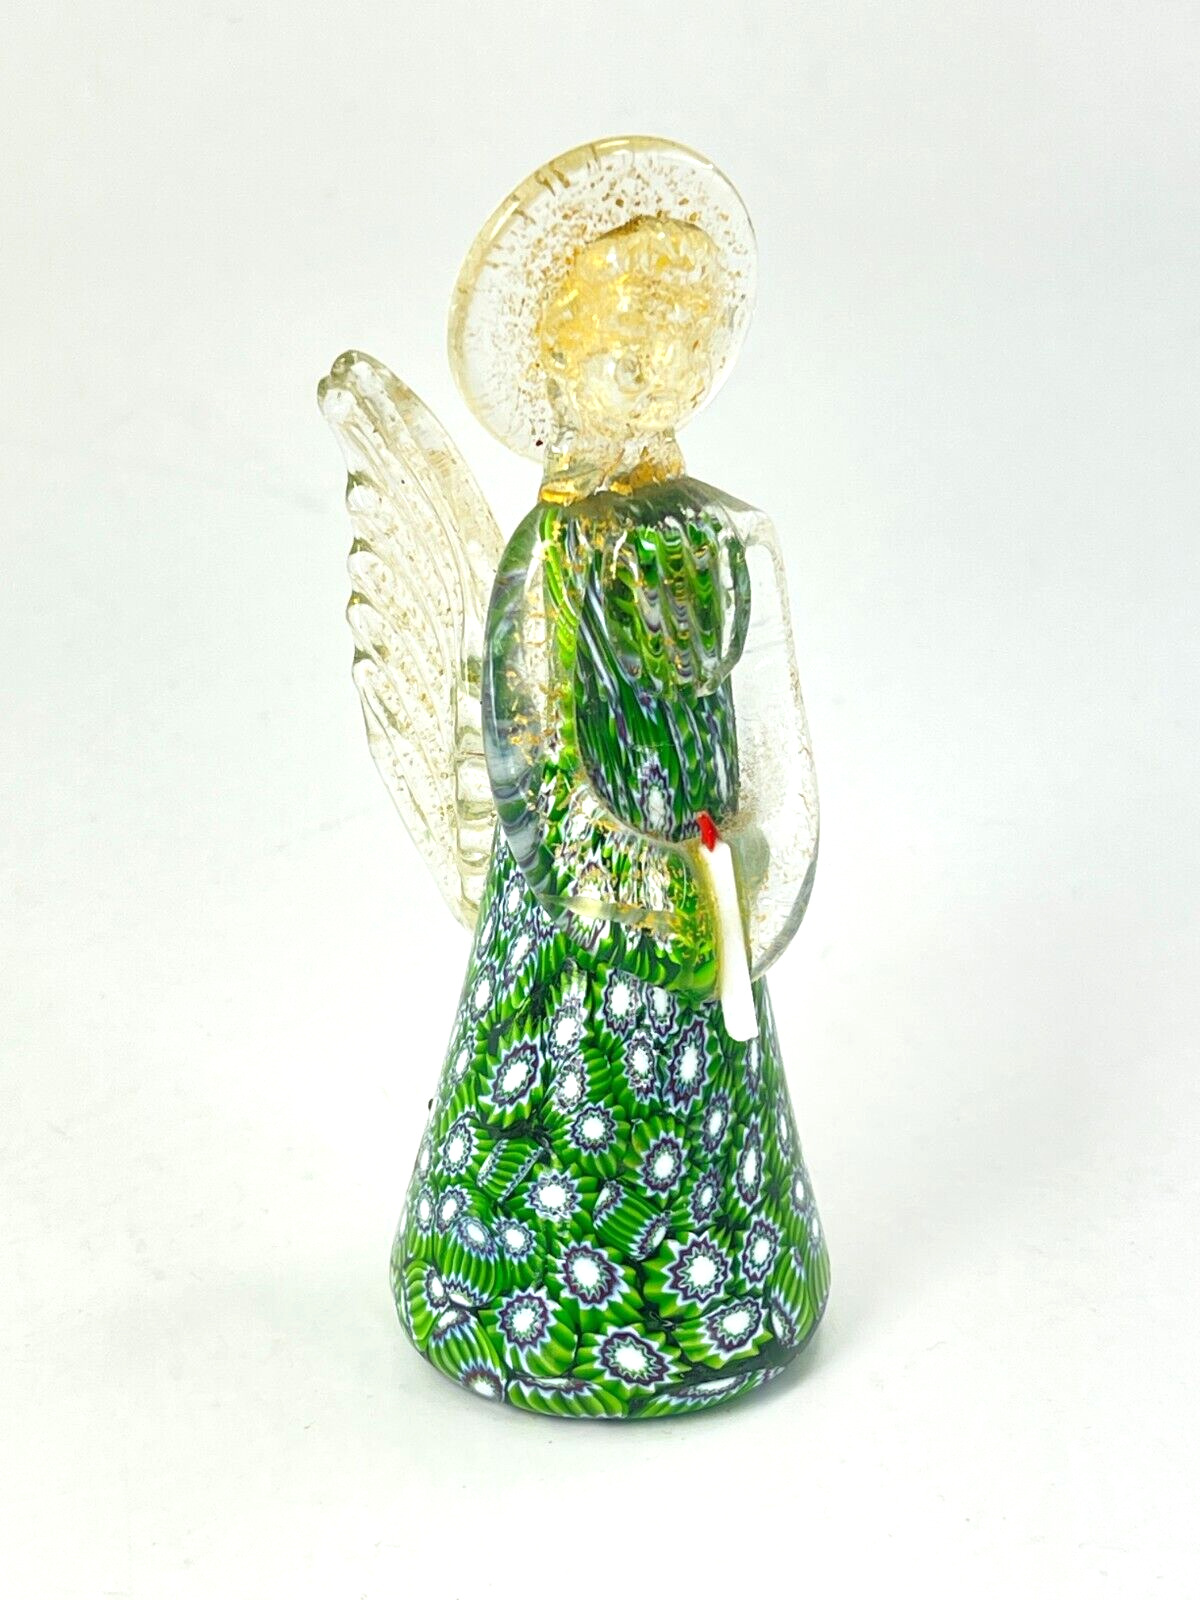 Vintage Murano Millefiori Handblown Glass Angel Green Dress Figurine 4.25